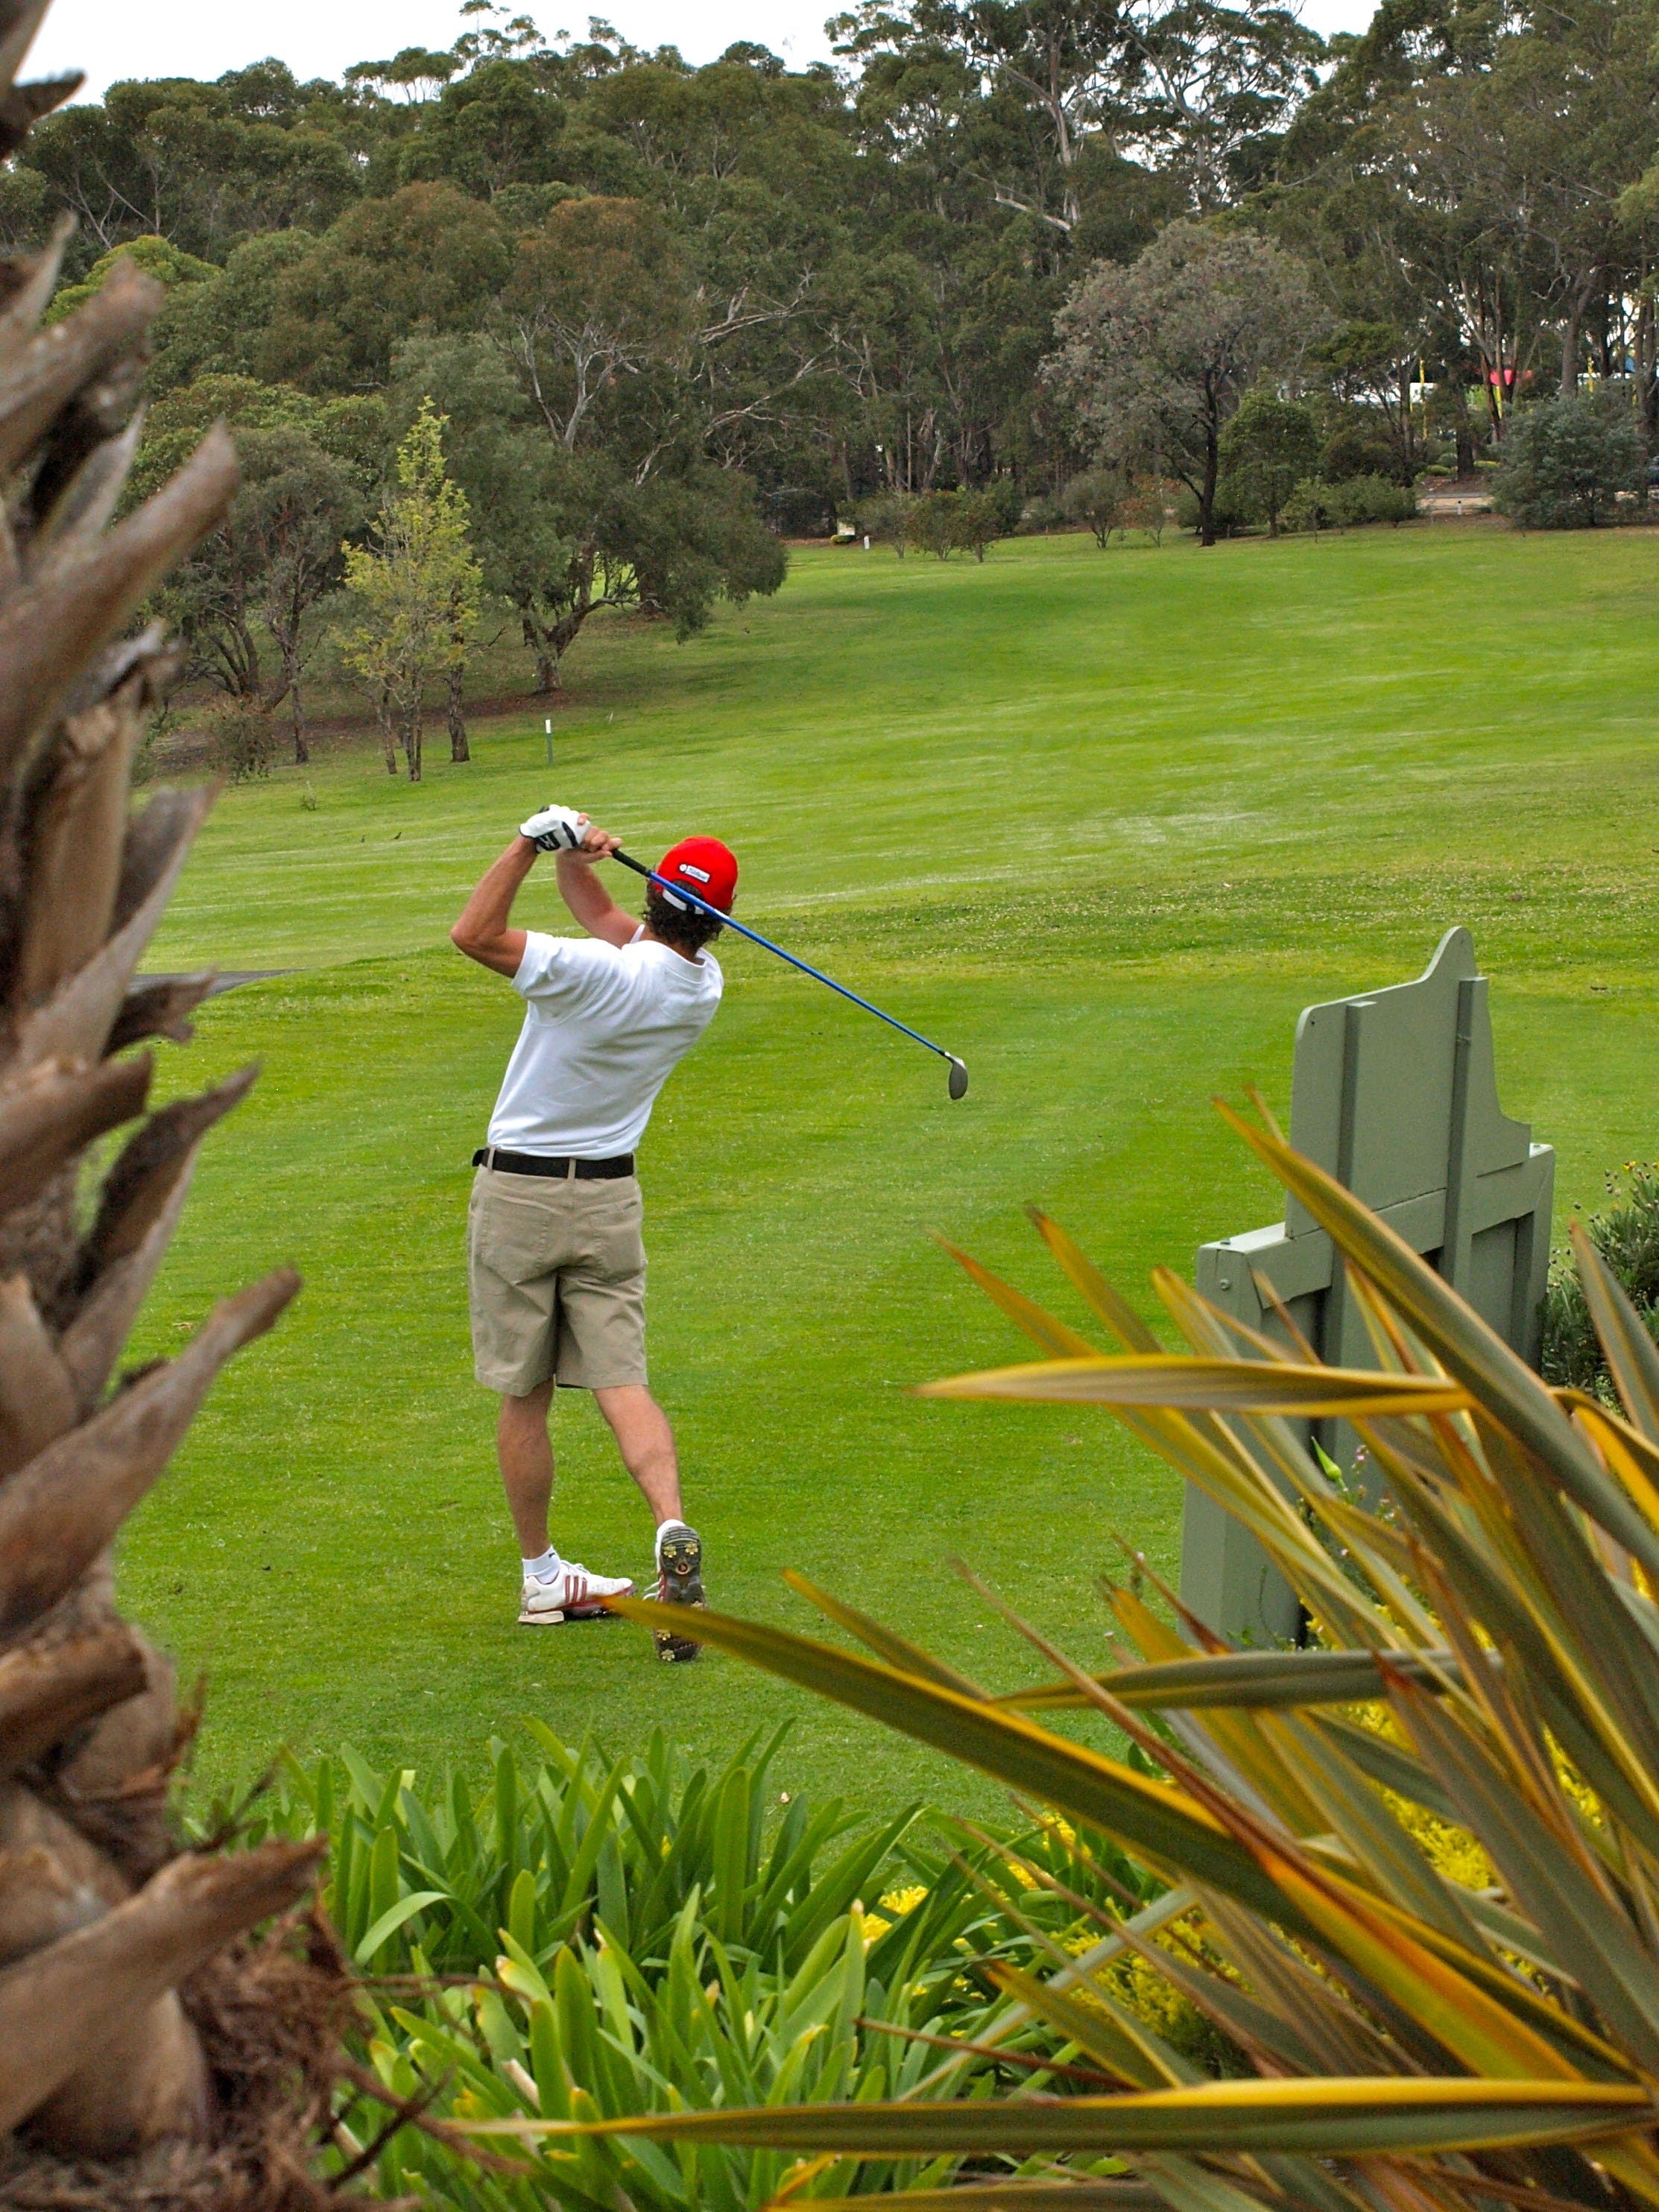 Pambula Merimbula Golf Club - Attractions Sydney